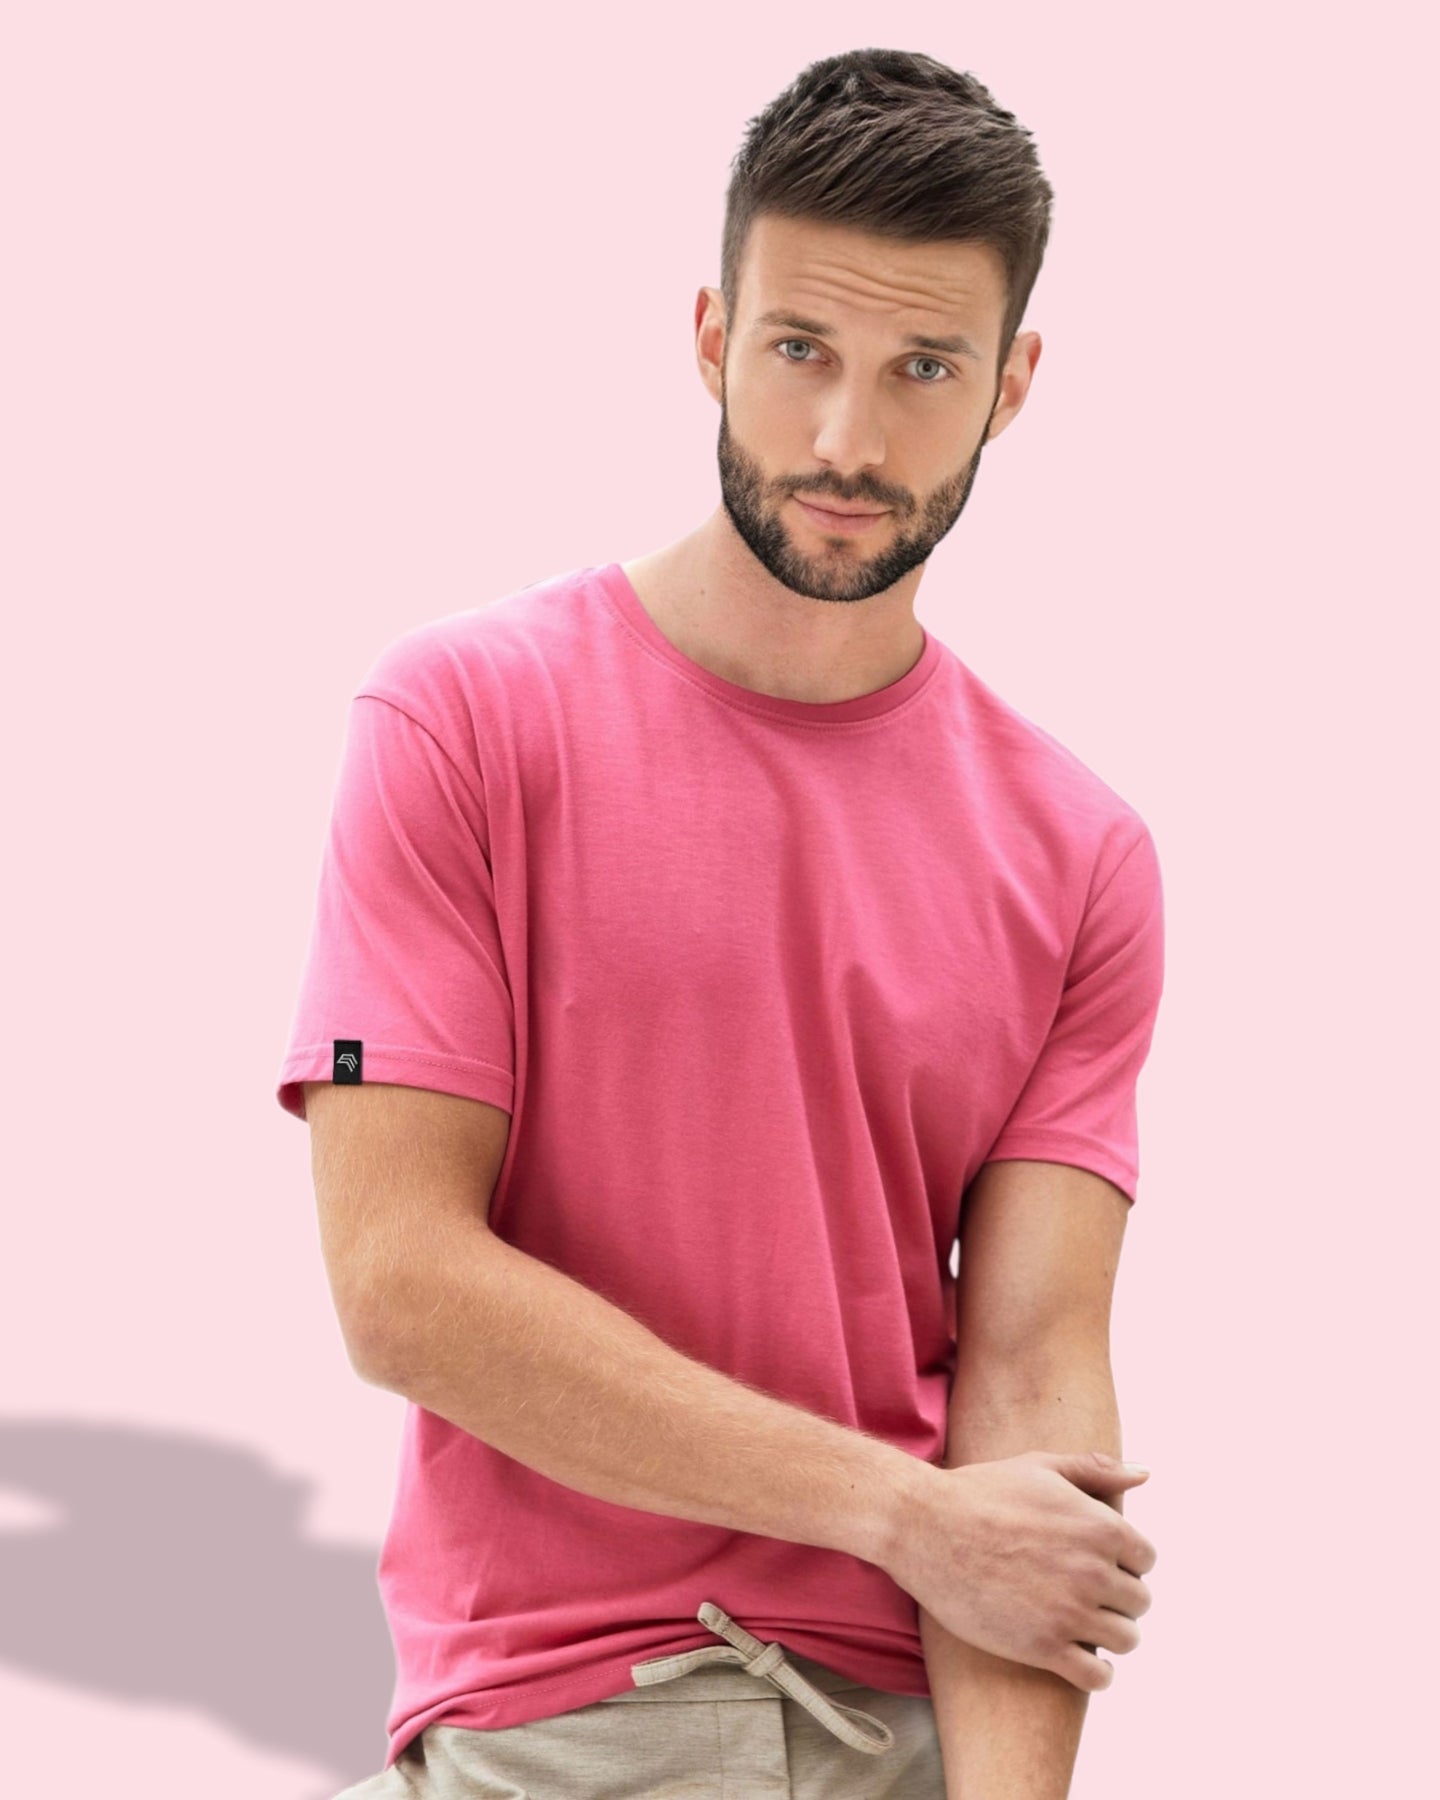 JAN 8008 ― Herren Bio-Baumwolle T-Shirt - Graphite Grau